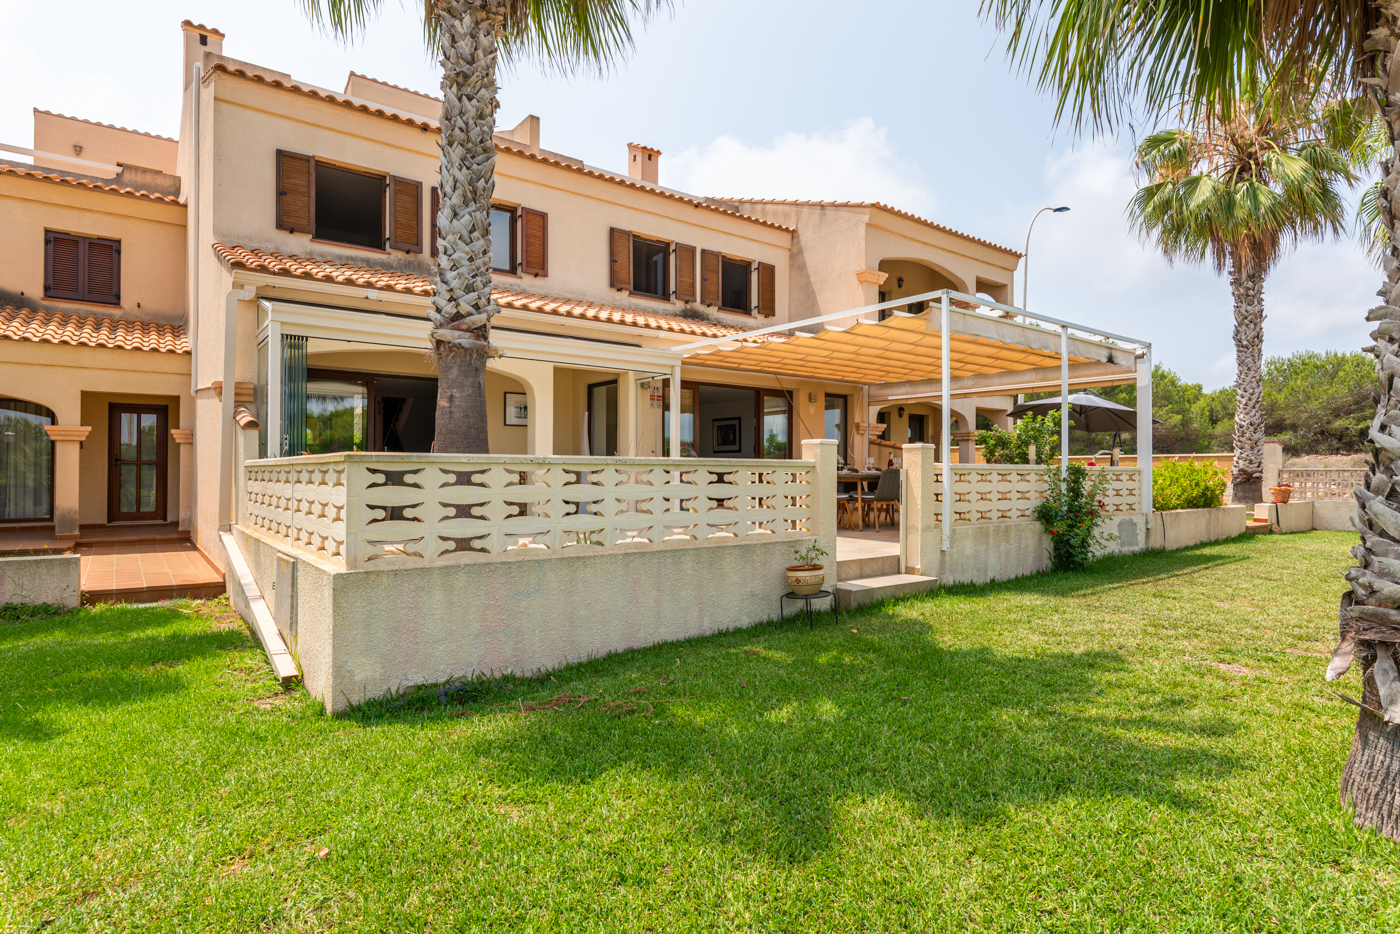 For sale: 4 bedroom house / villa in Gran Alacant, Costa Blanca